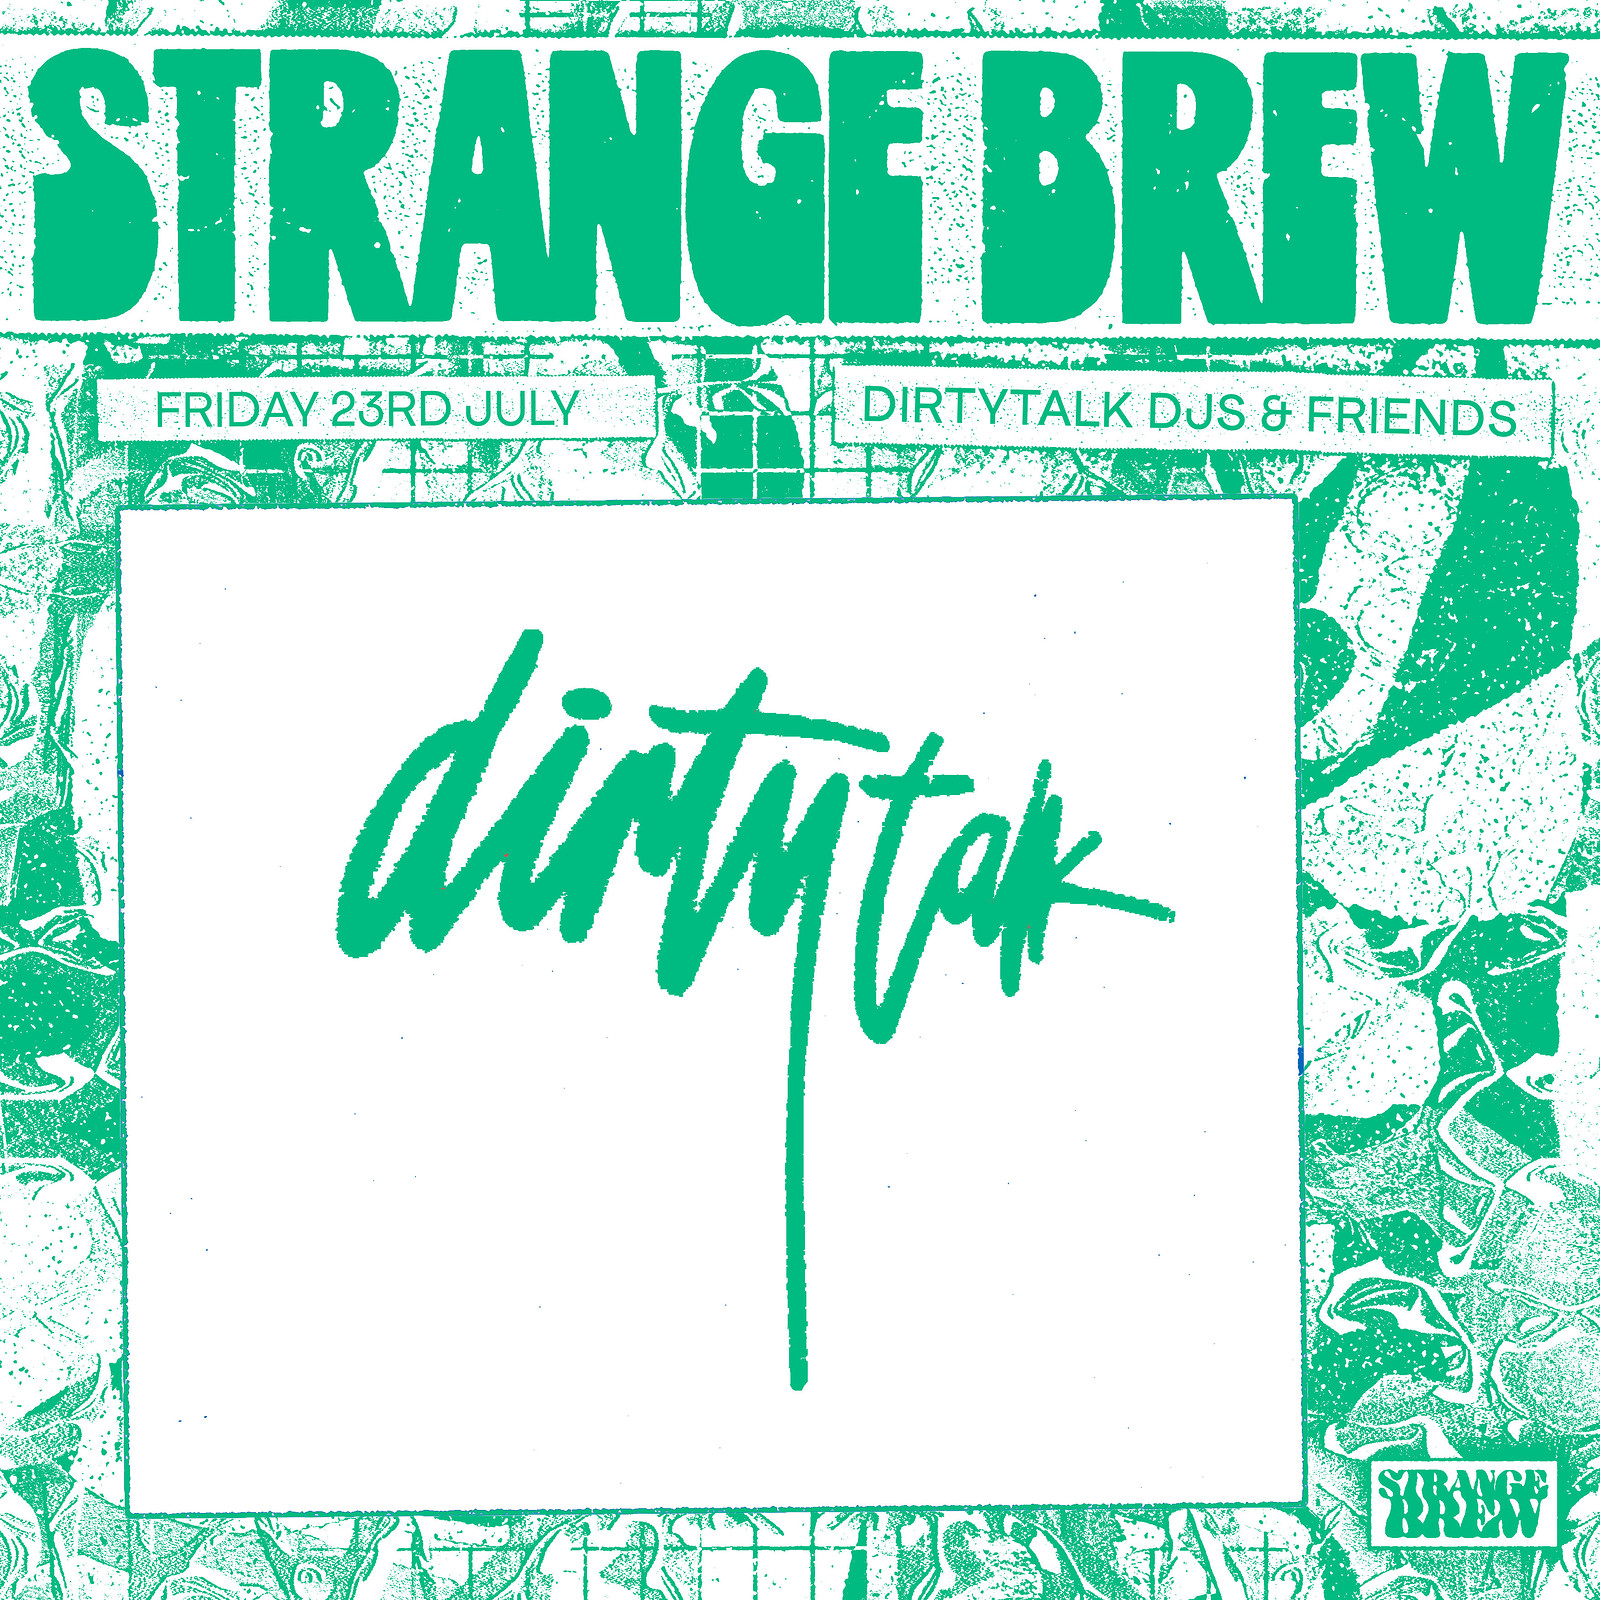 Dirtyalk & Friends at Strange Brew